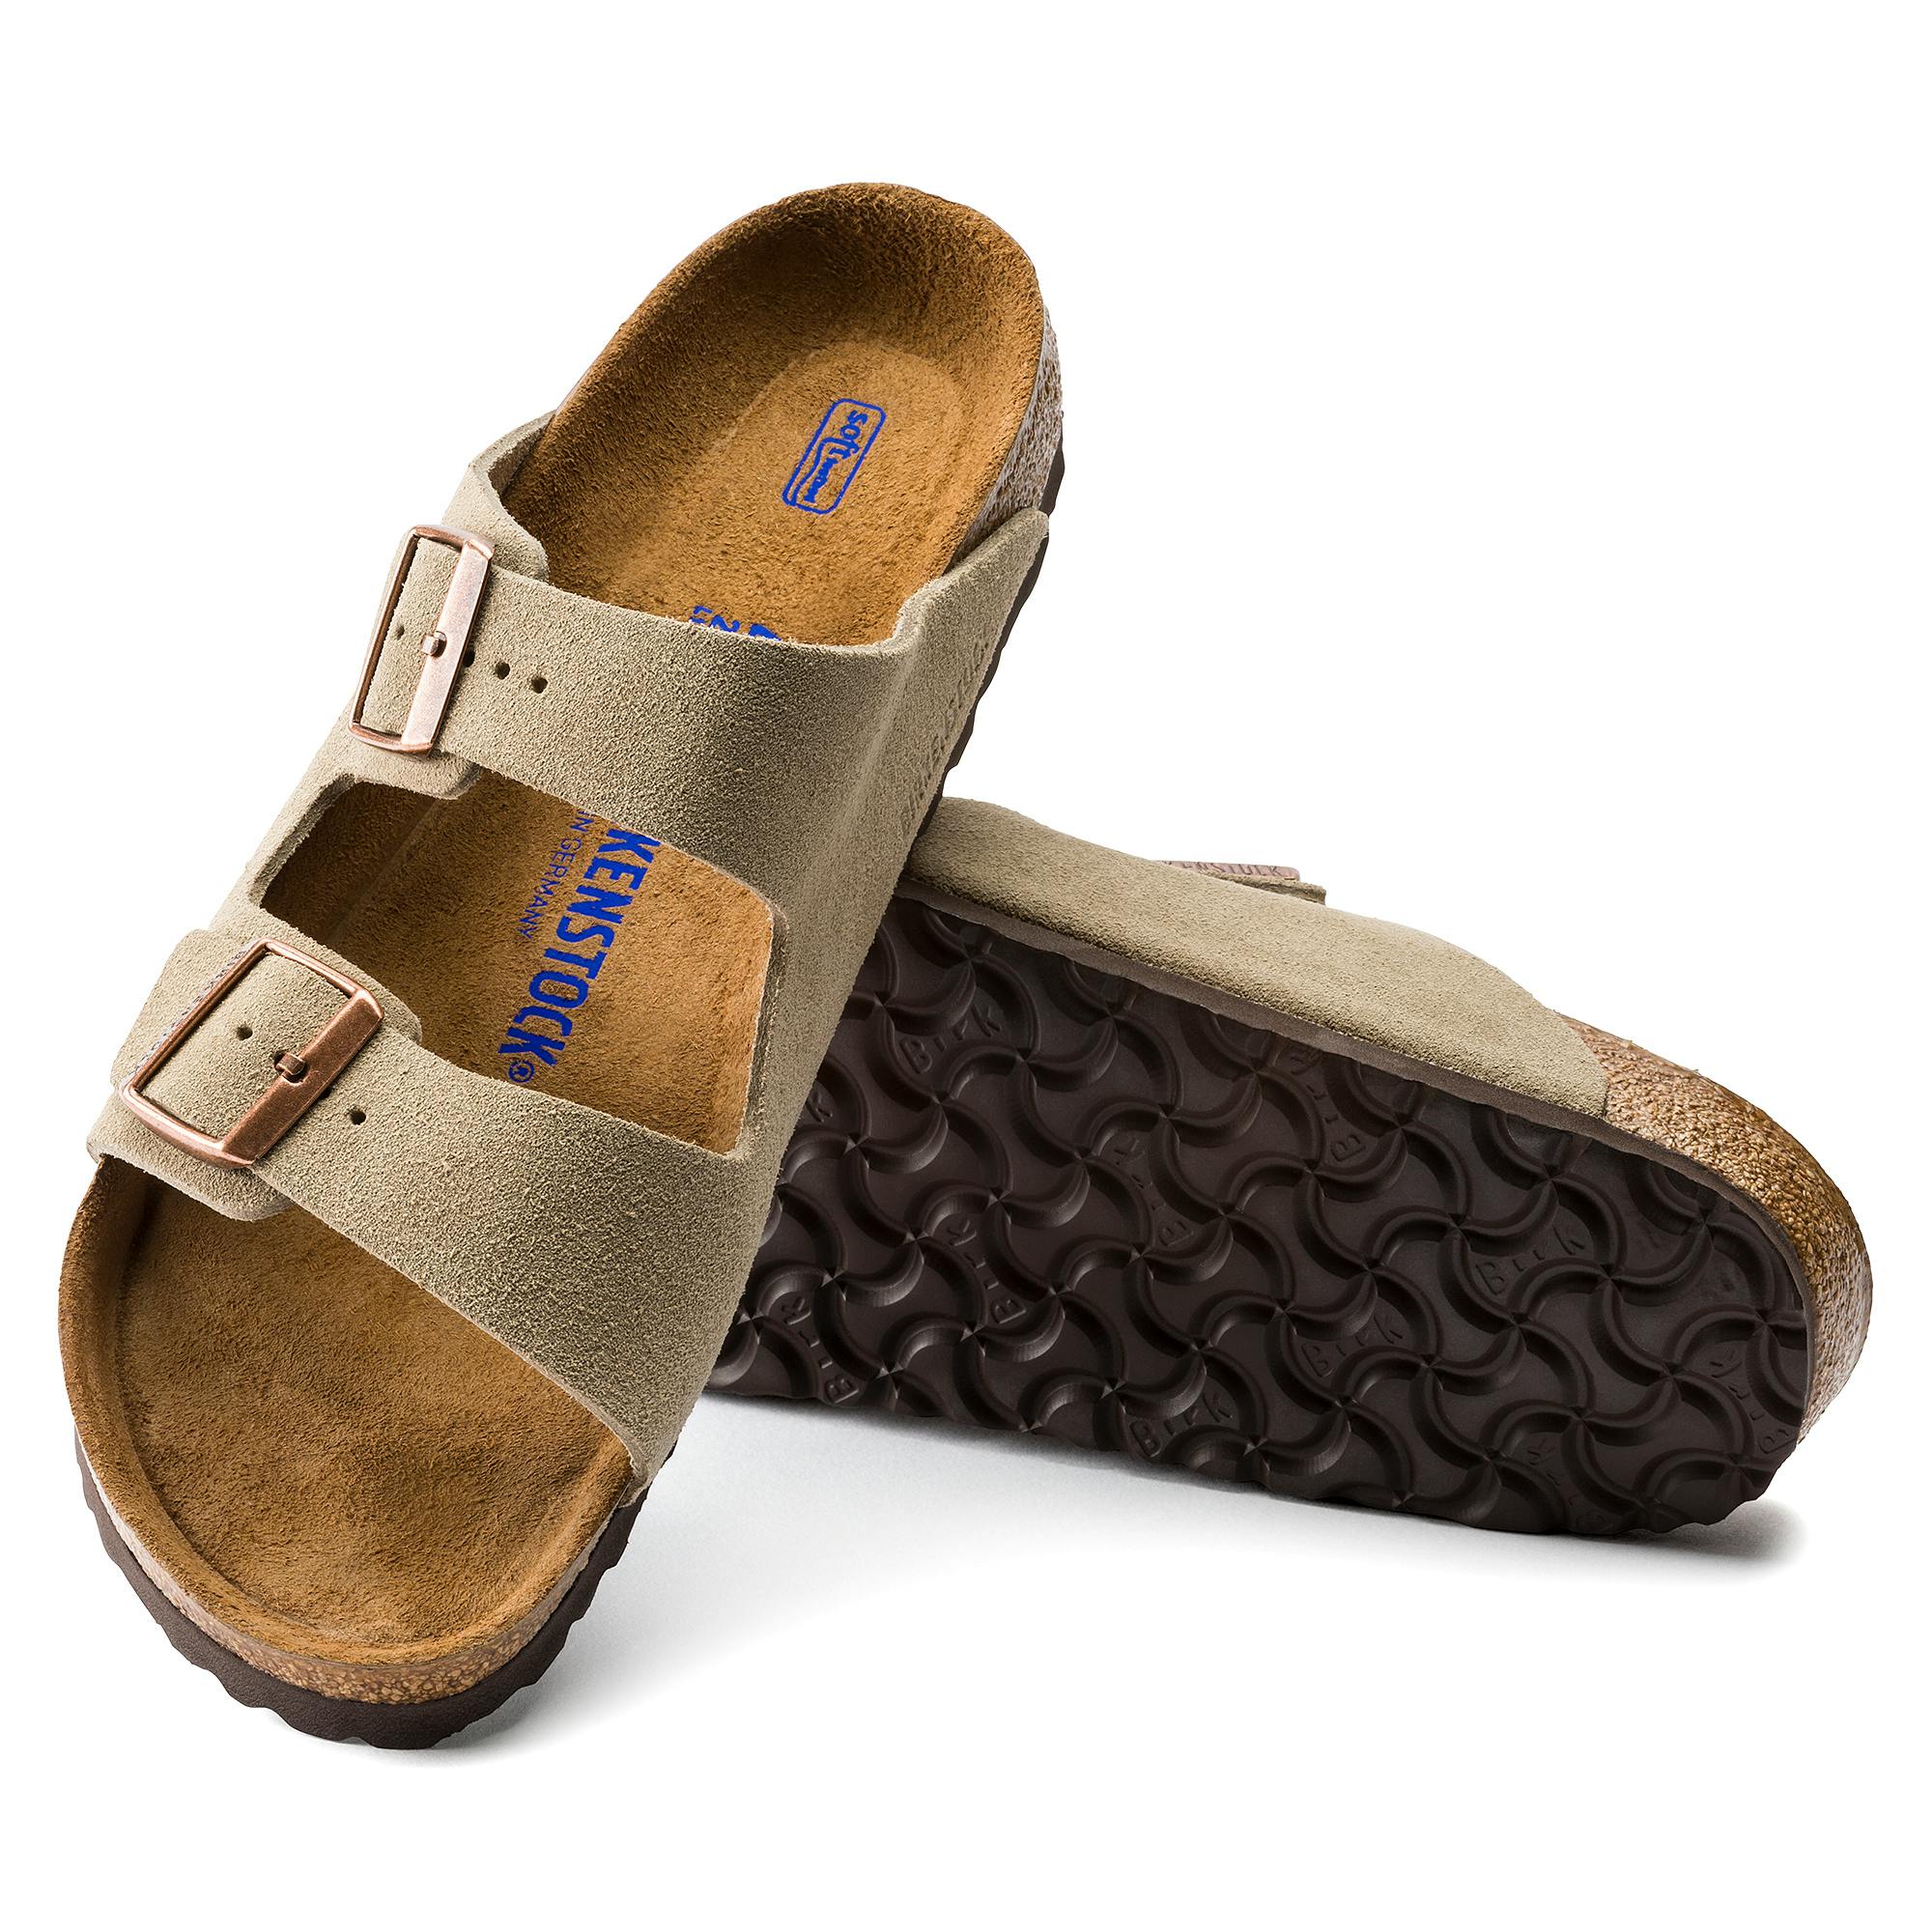 Birkenstock Arizona Taupe Suede Soft Footbed Sandals